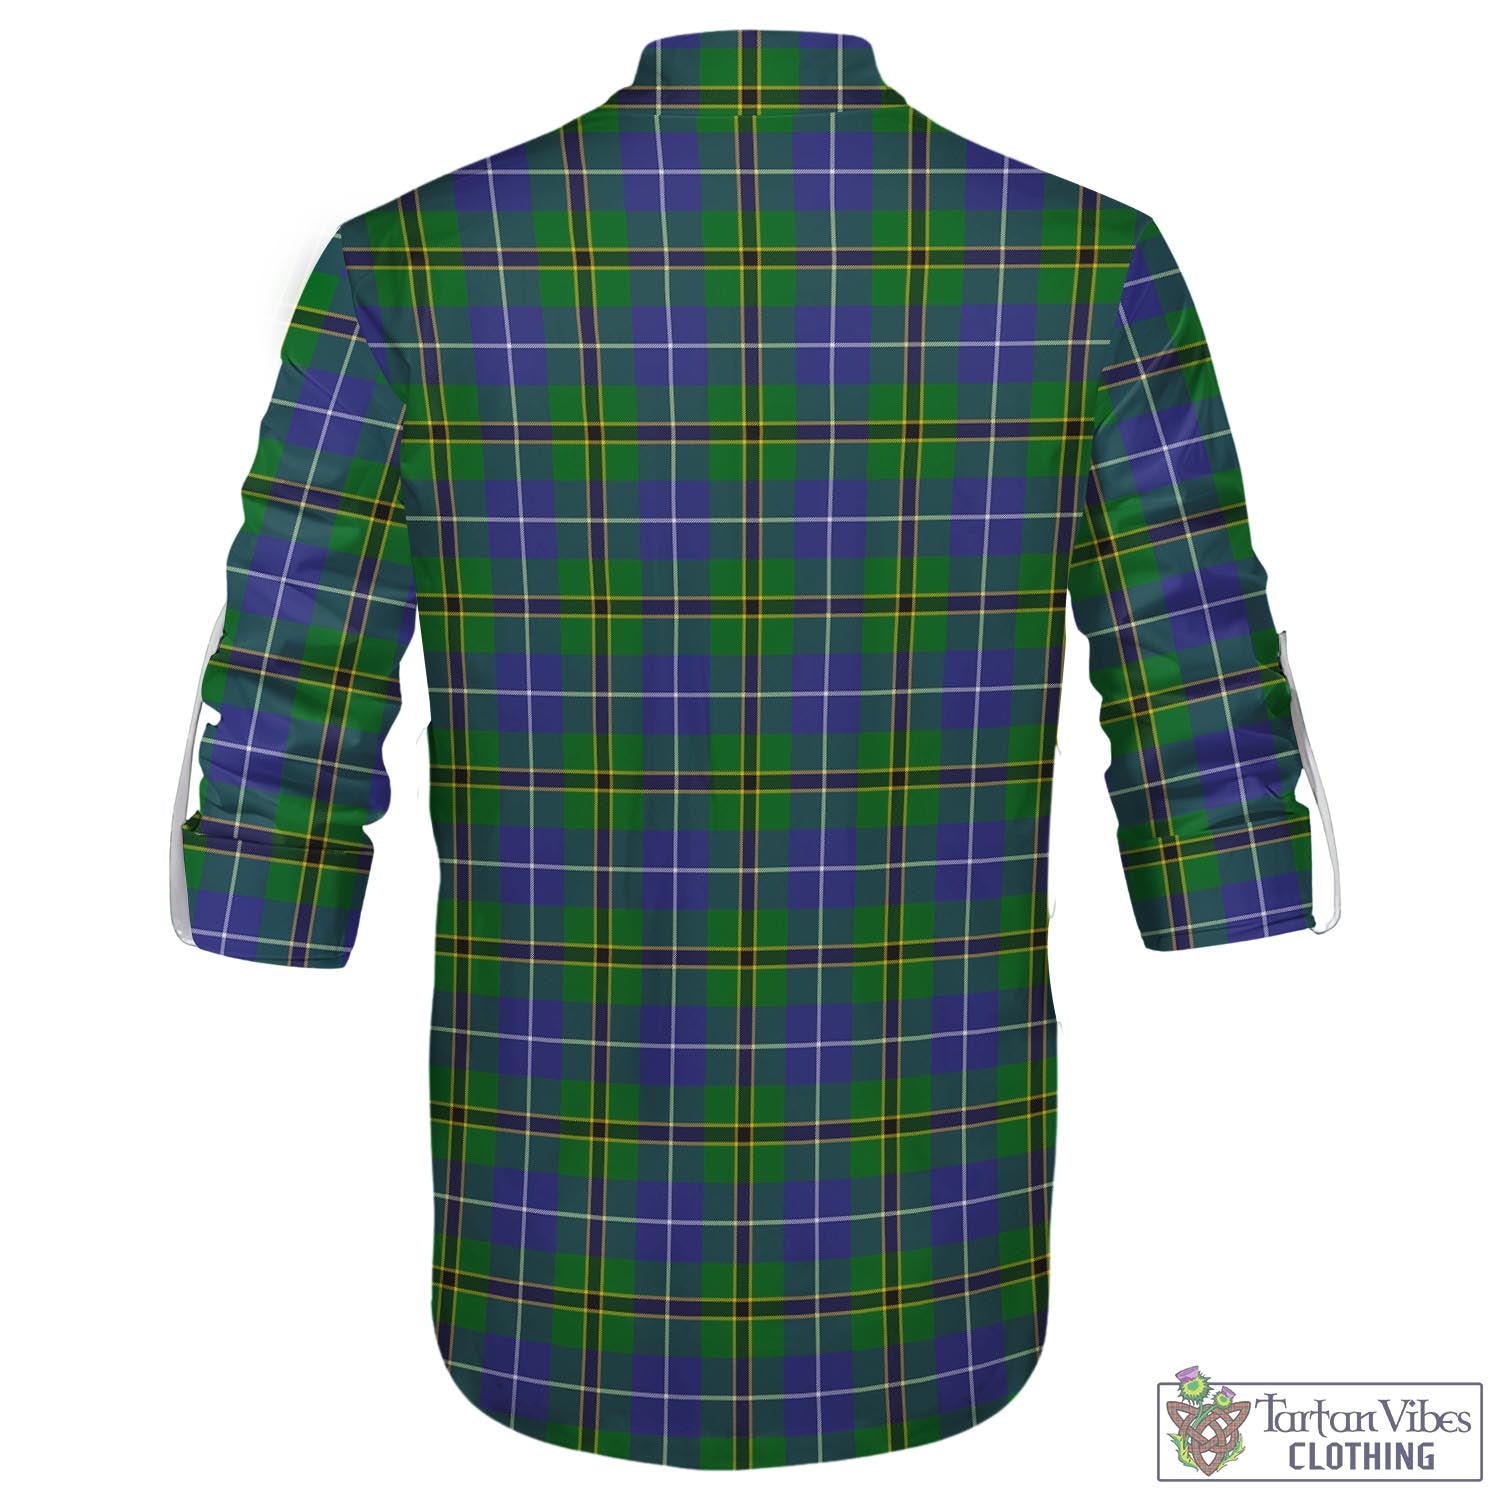 Tartan Vibes Clothing Turnbull Hunting Tartan Men's Scottish Traditional Jacobite Ghillie Kilt Shirt with Family Crest